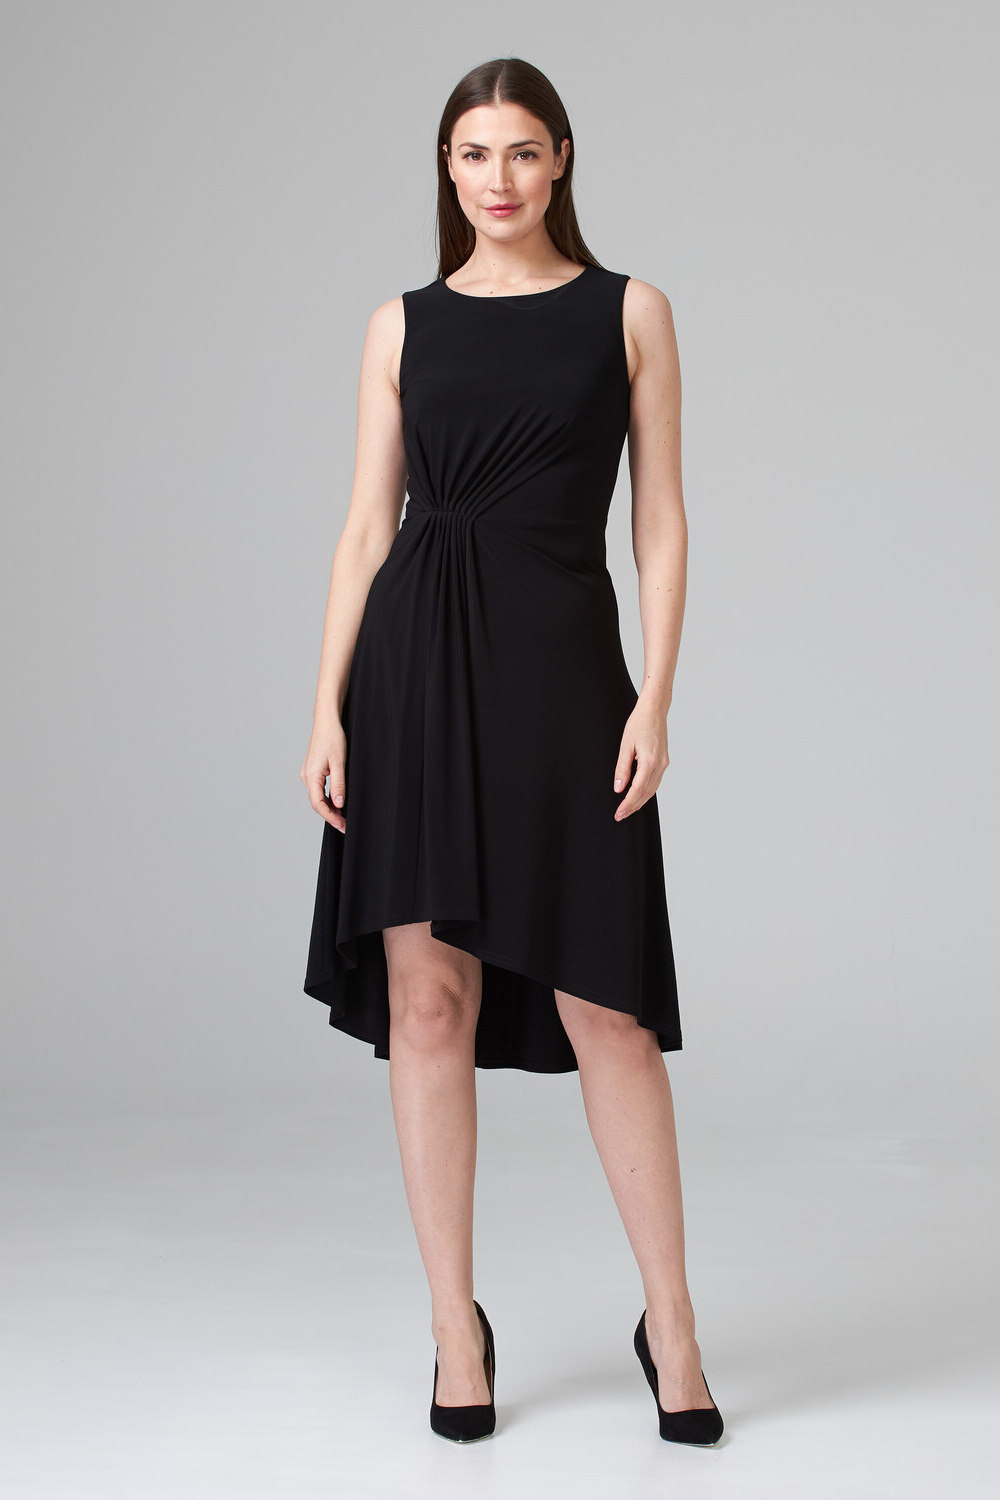 Joseph Ribkoff Dress Style 202129. Black